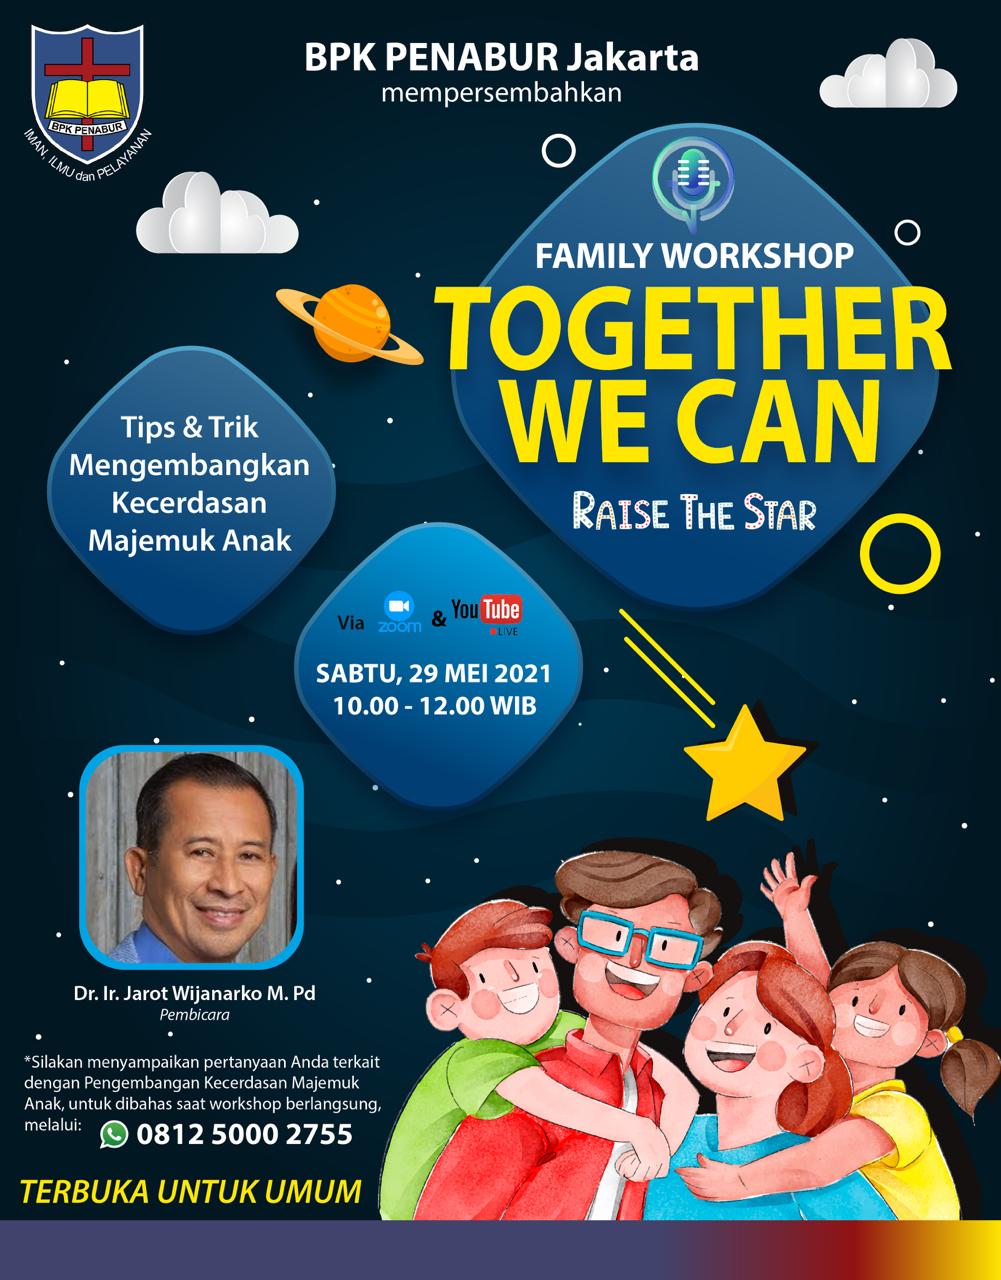 BPK PENABUR Jakarta : Family Workshop "Together We Can Raise The Star"